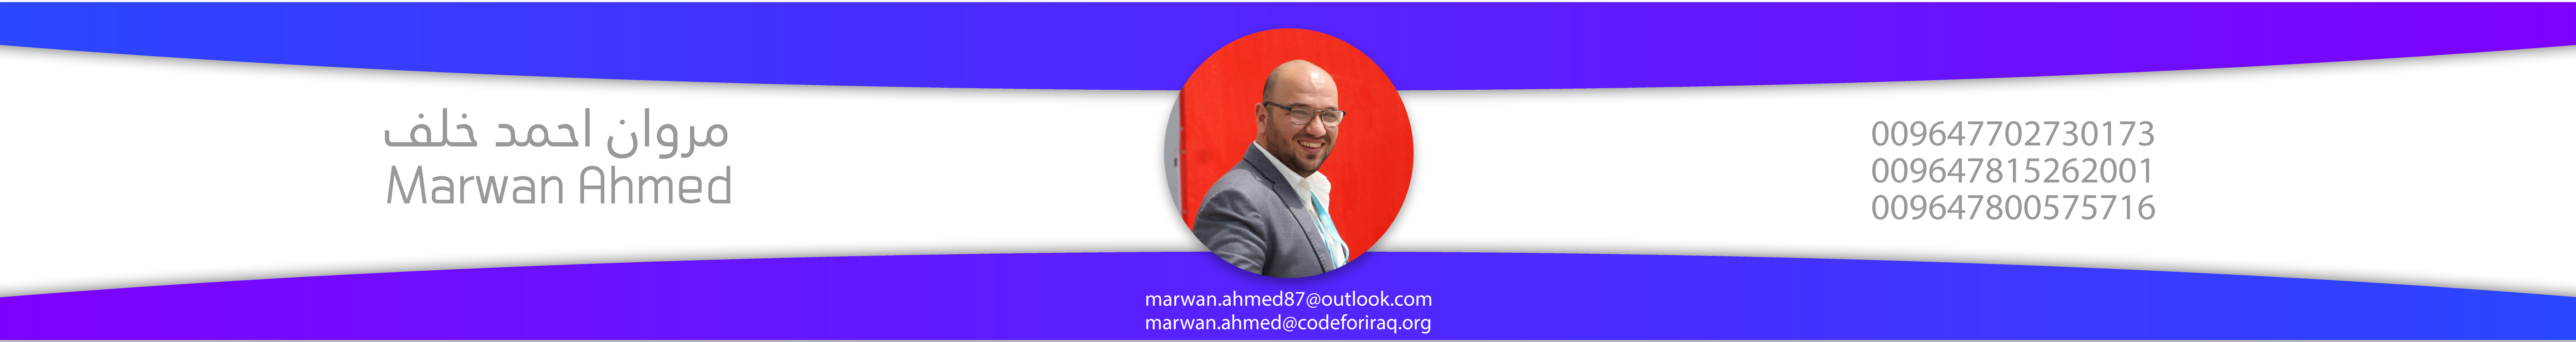 Marwan Ahmed 的个人资料横幅